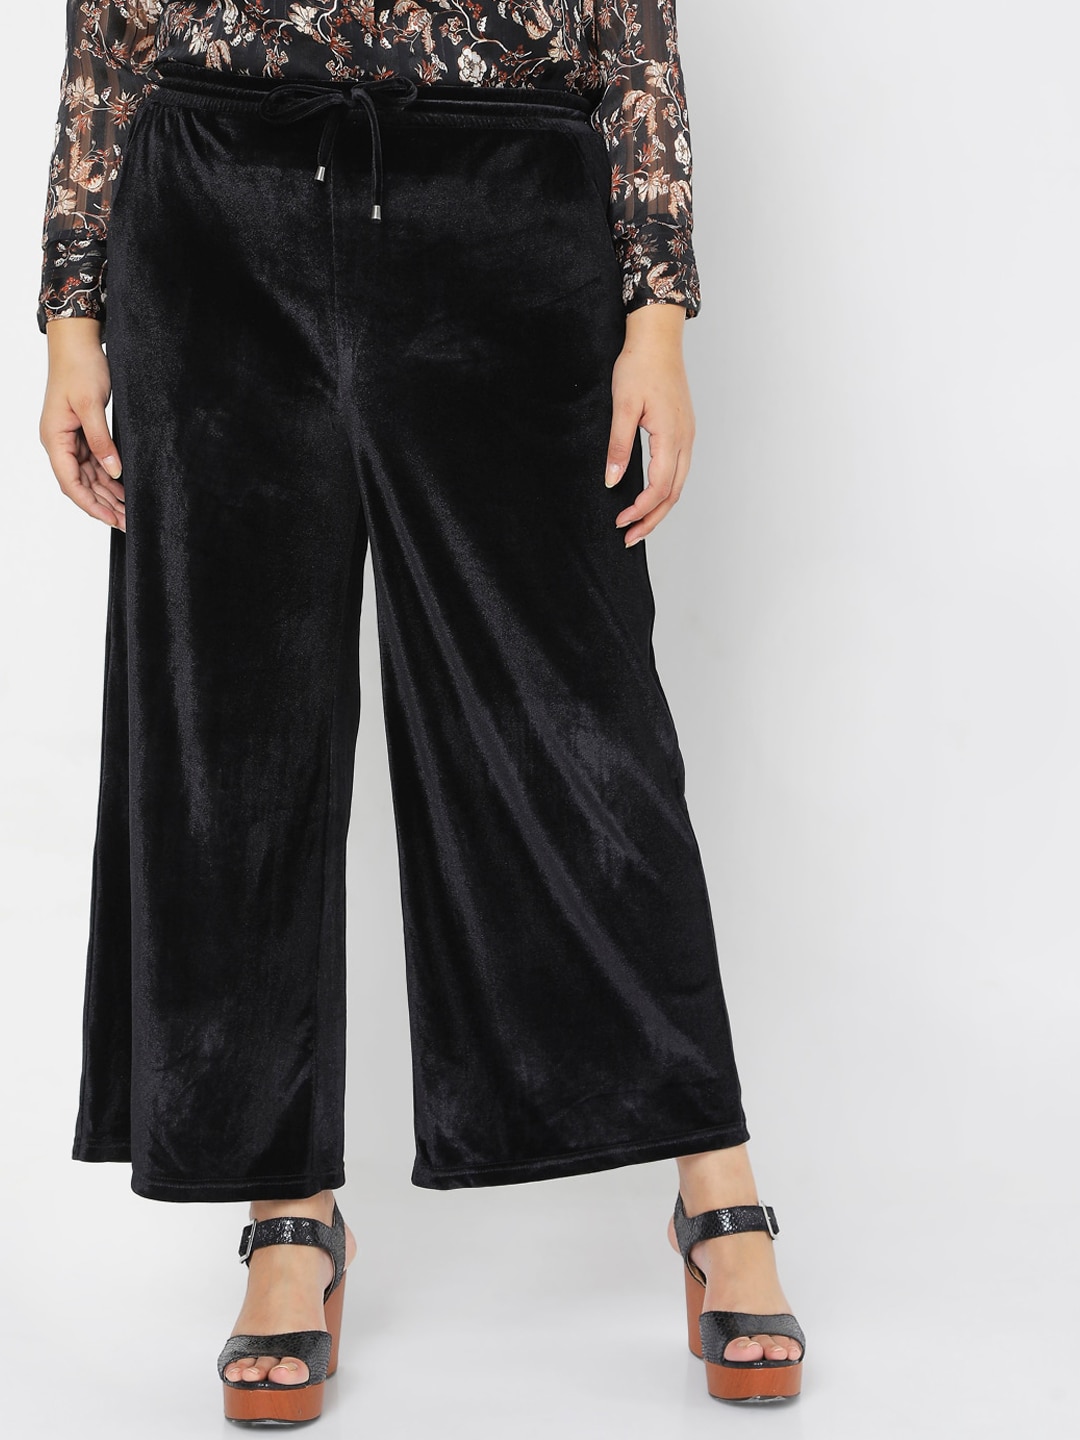 Vero Moda Women Black Velvet Loose Fit Culottes Trousers Price in India